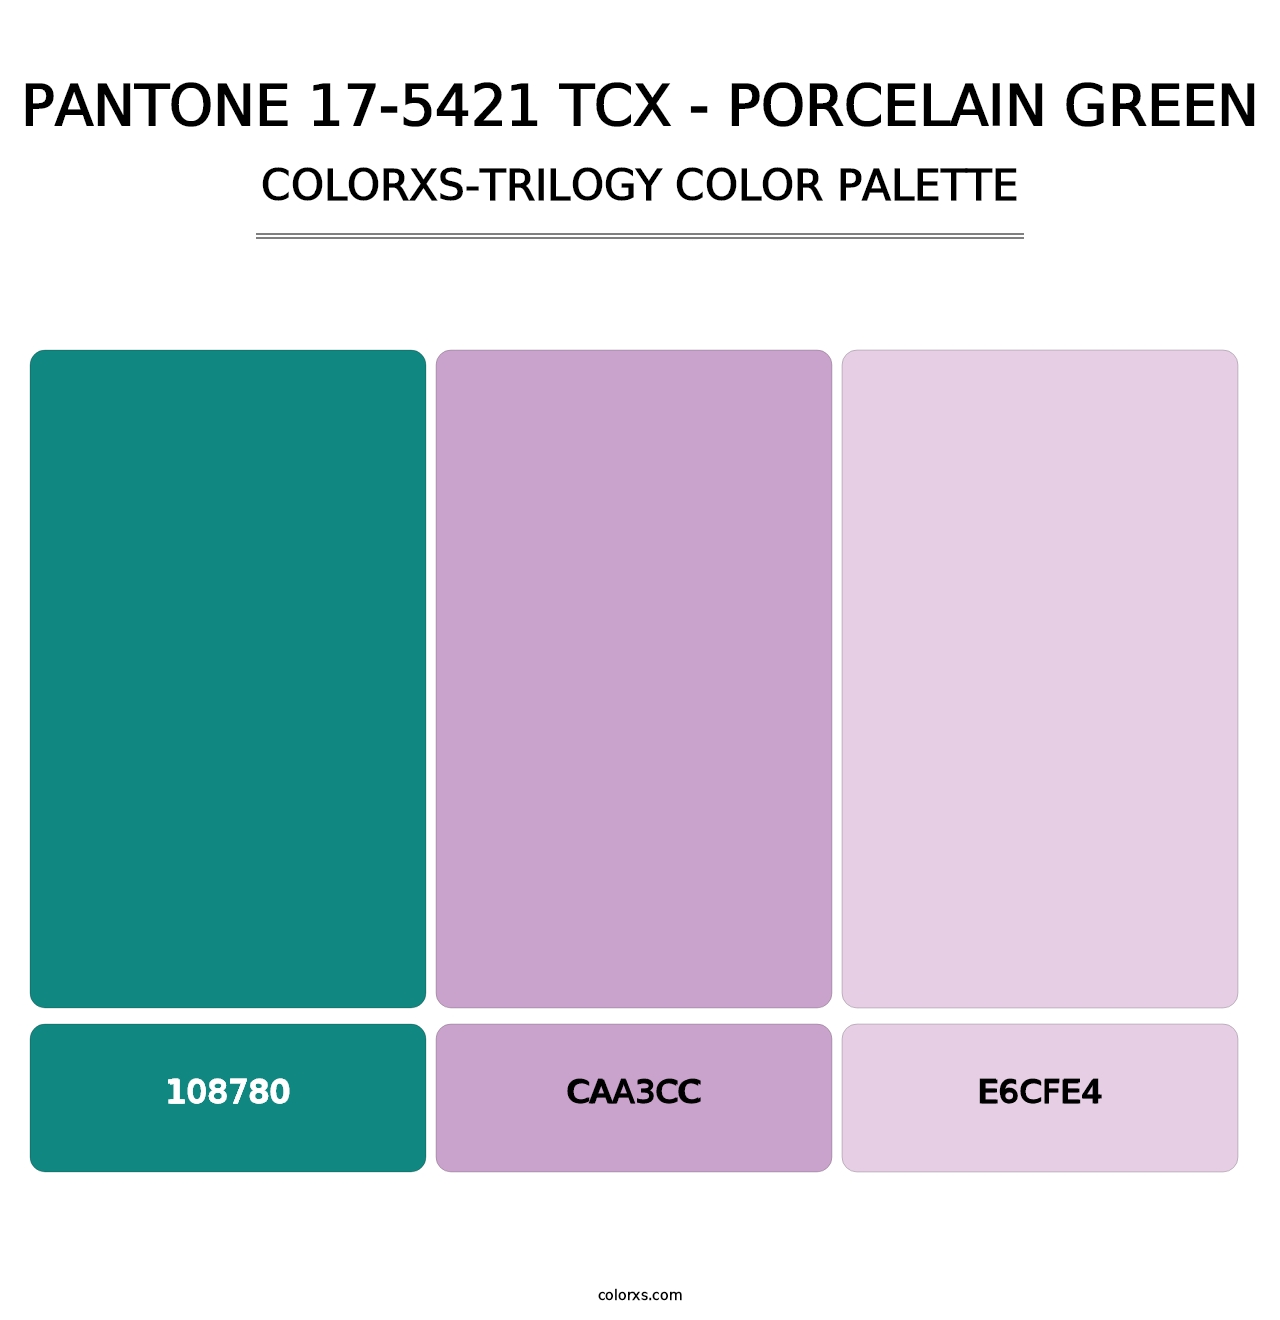 PANTONE 17-5421 TCX - Porcelain Green - Colorxs Trilogy Palette